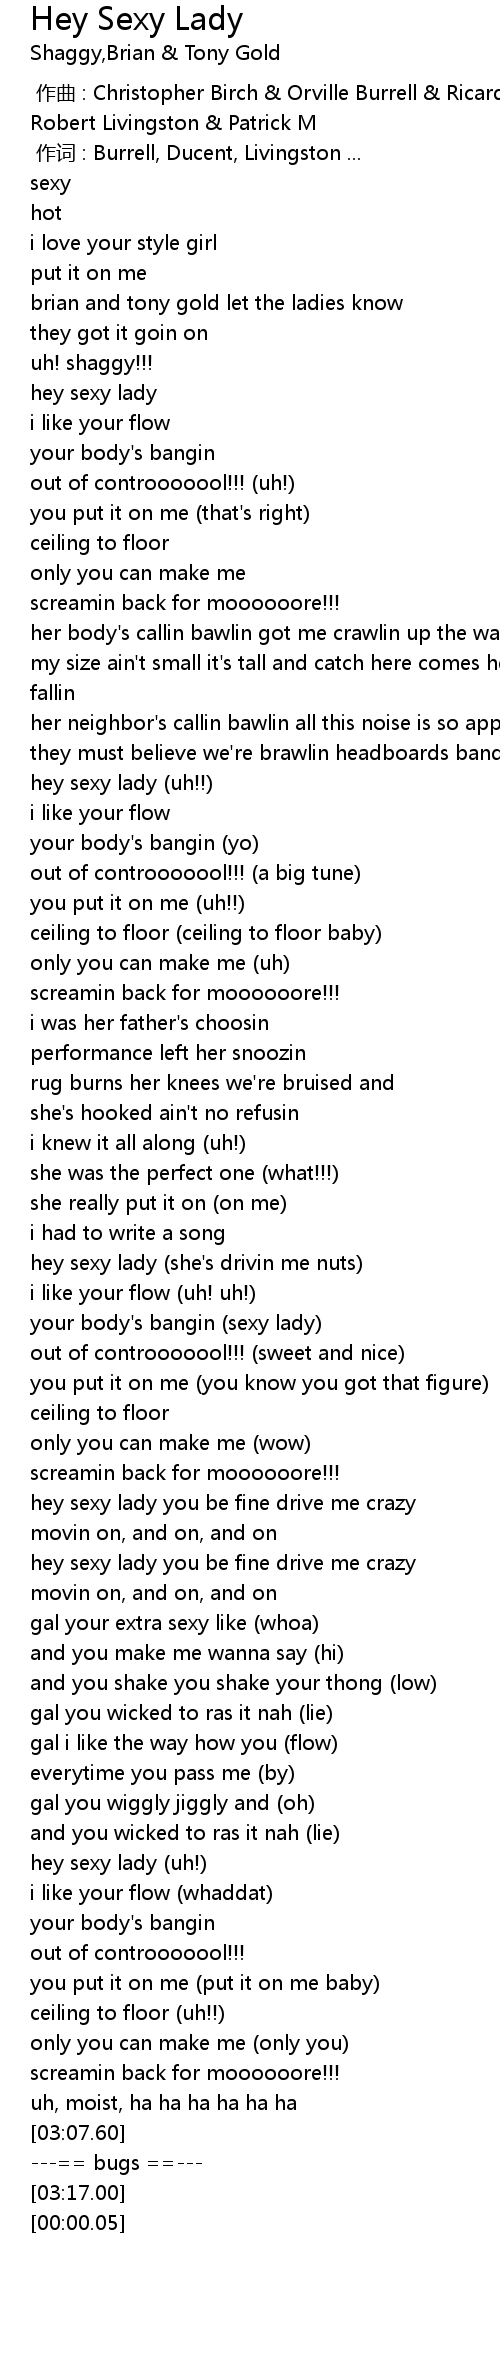 Hey Sexy Lady Lyrics Follow Lyrics hey sexy lady lyrics follow lyrics